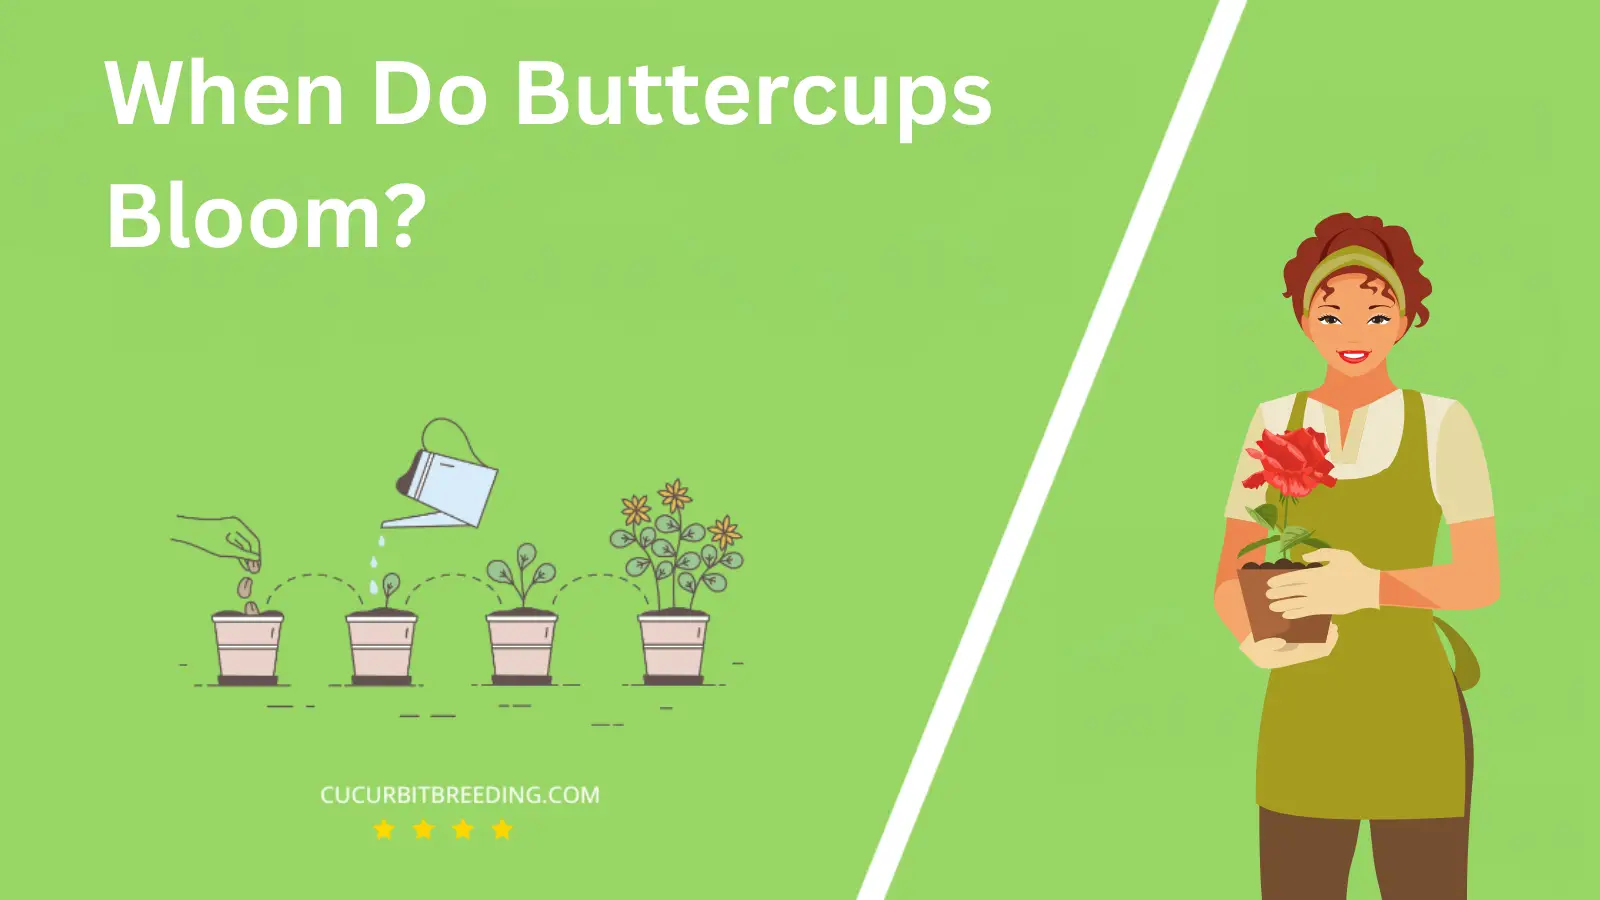 When Do Buttercups Bloom?